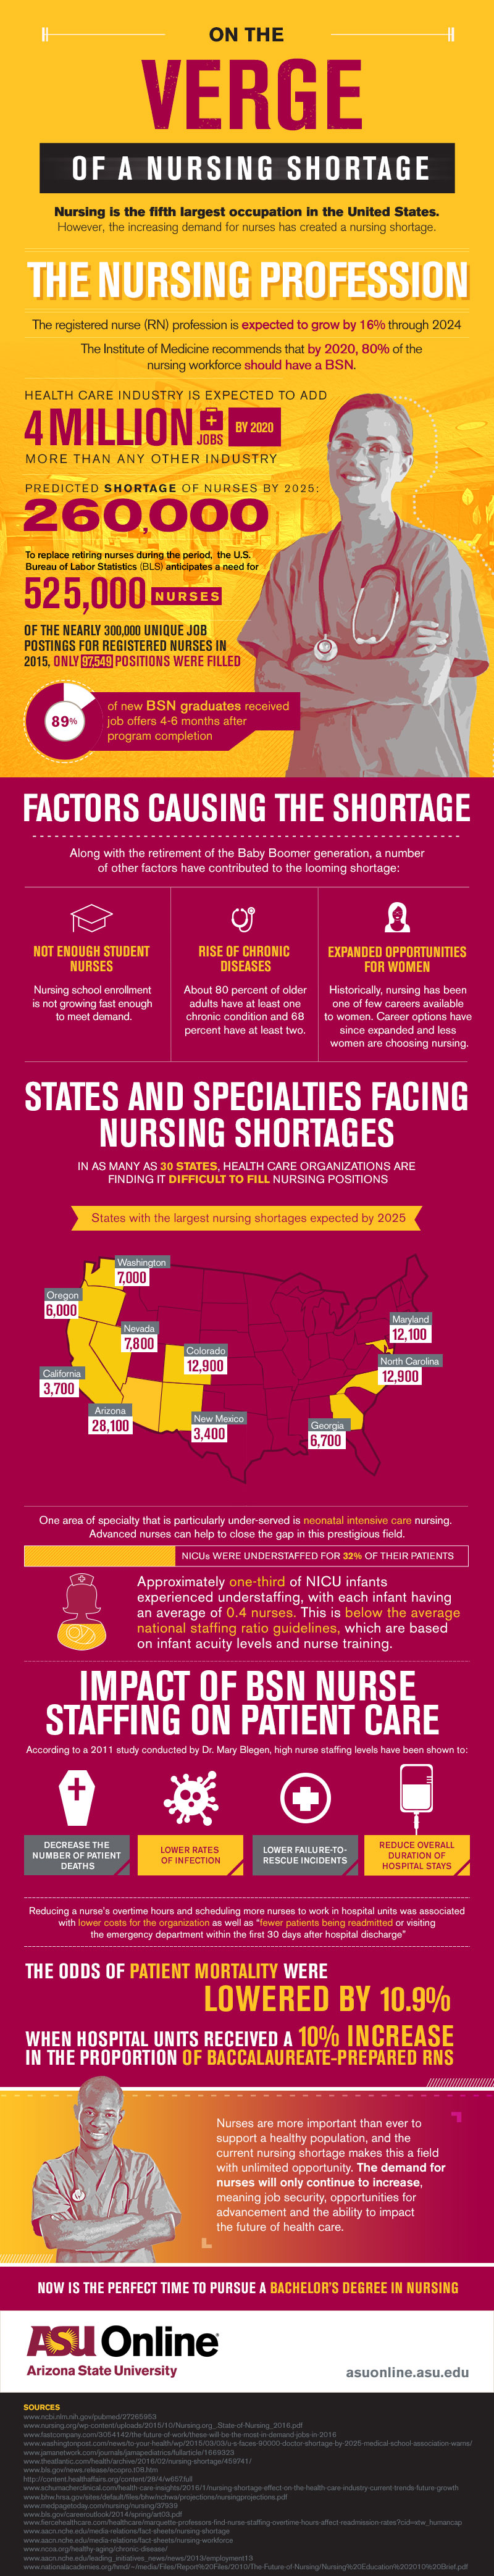 On The Verge of a Nursing Shortage